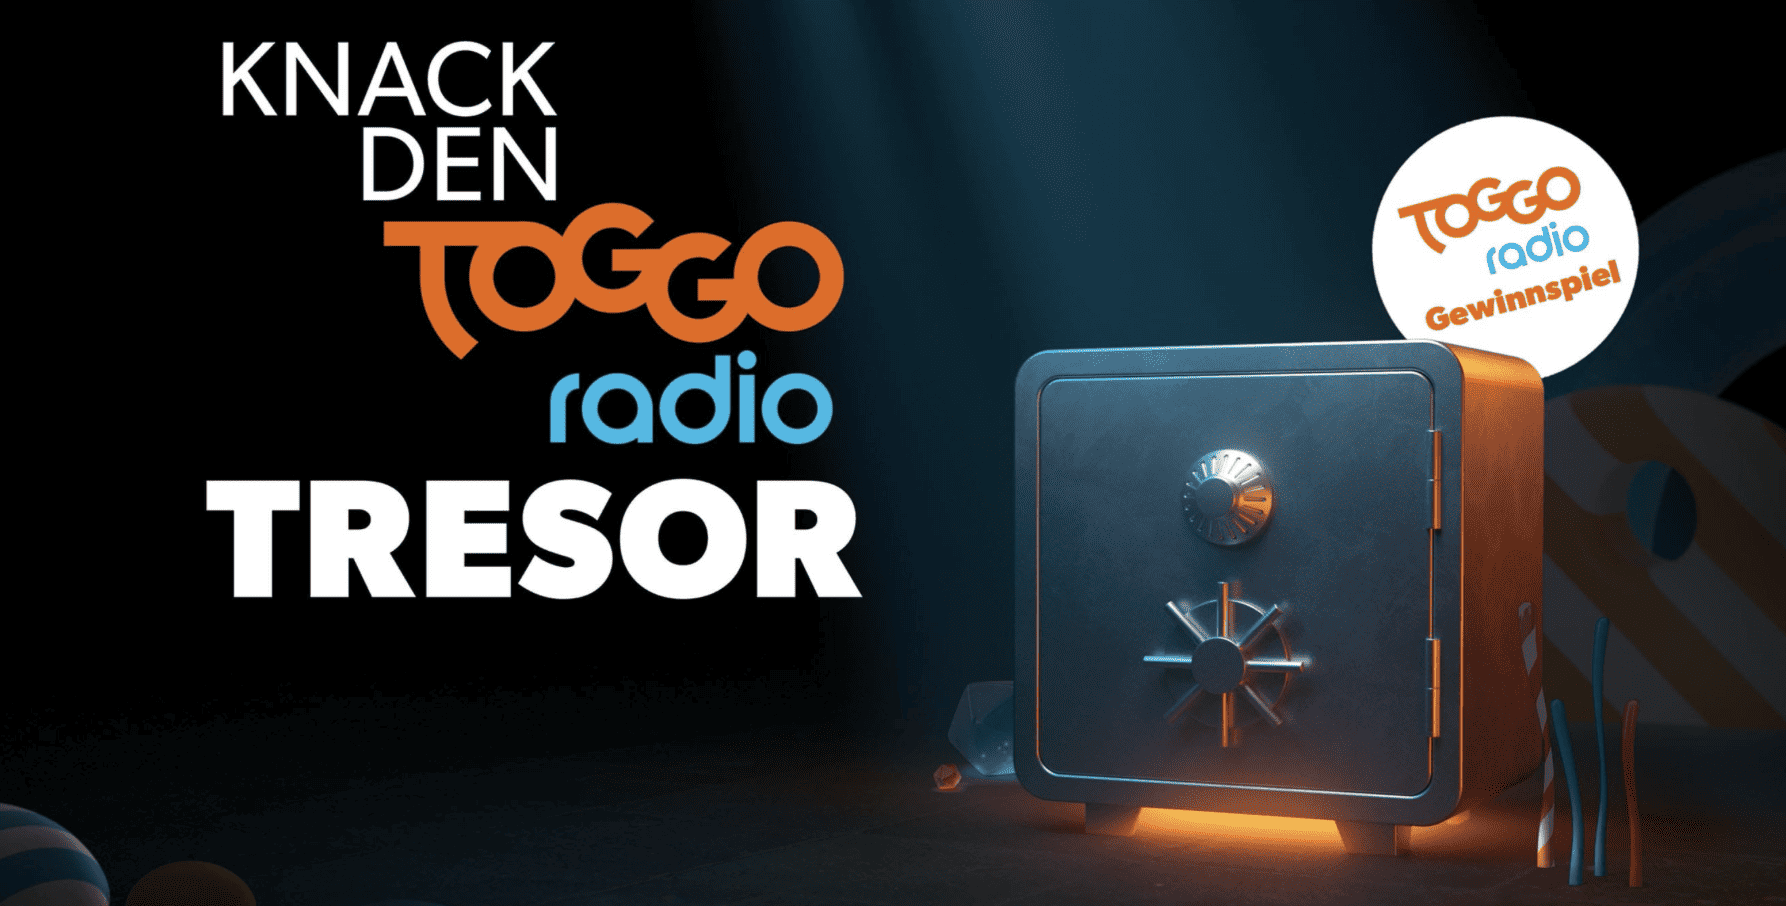 case_Radio-Gewinnspiel „Knack den TOGGO Radio Tresor“